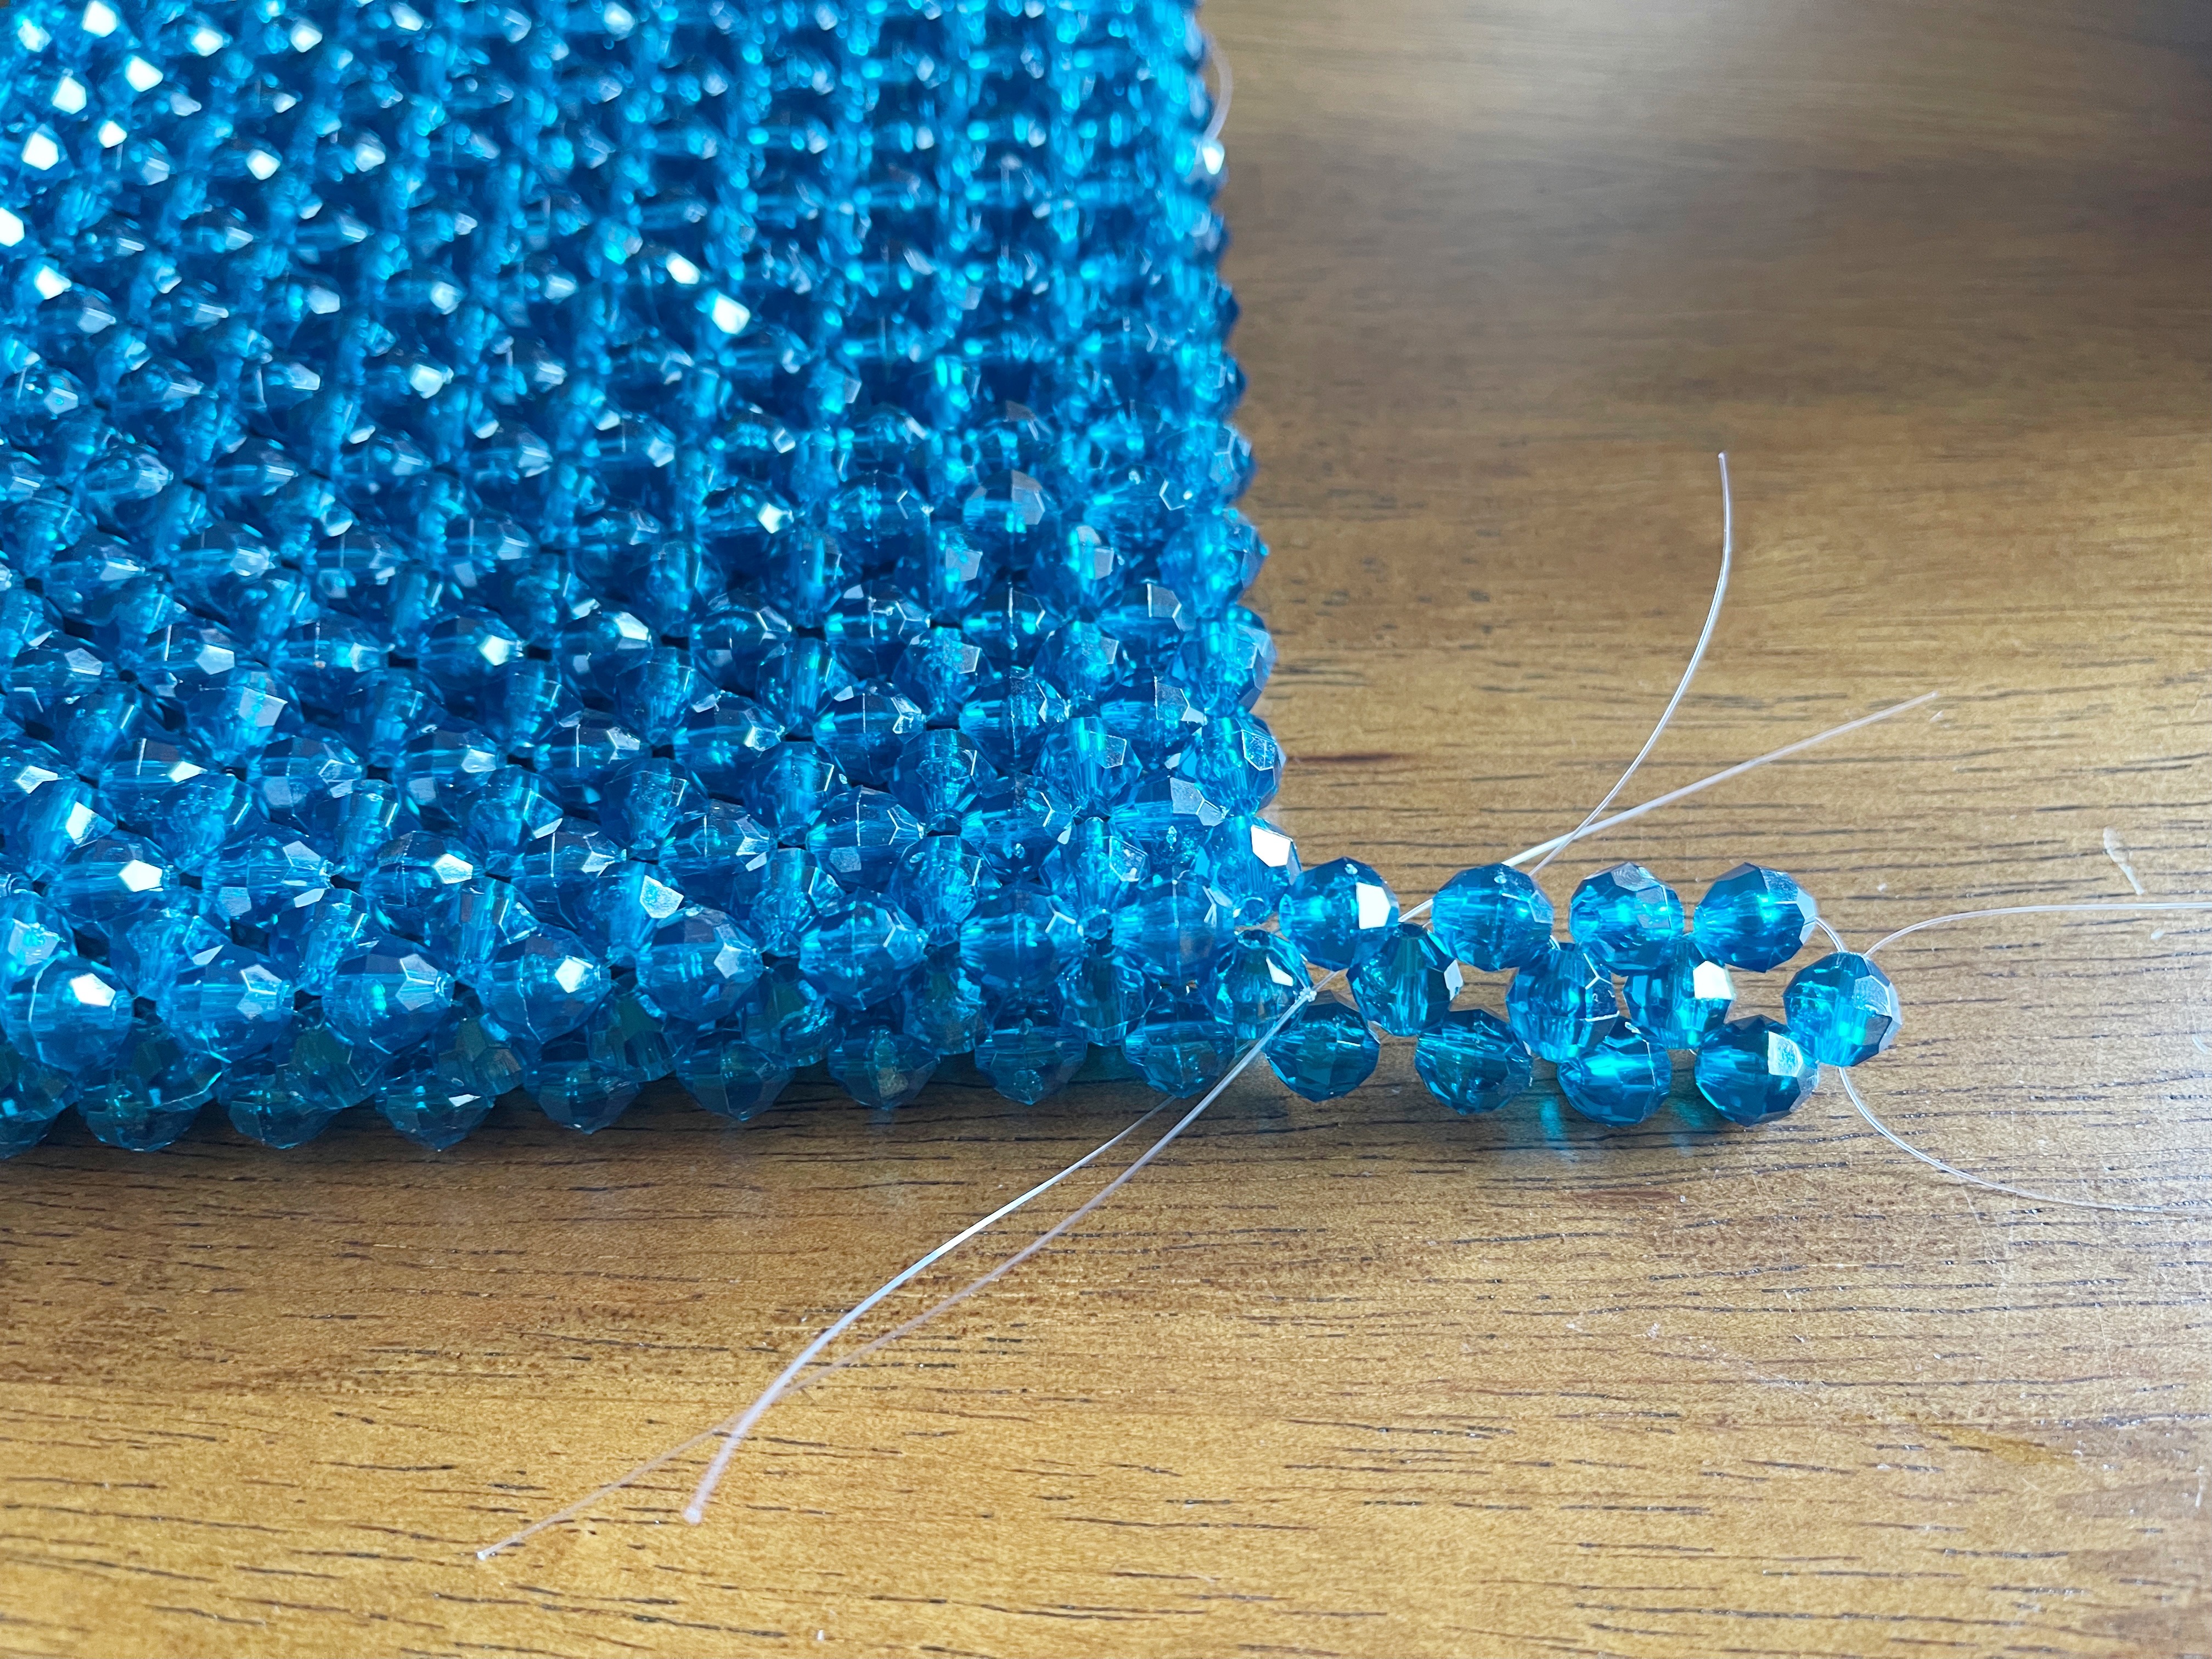 Copper Bead Crochet Bag Instant Download Pattern by Ann Benson - Etsy